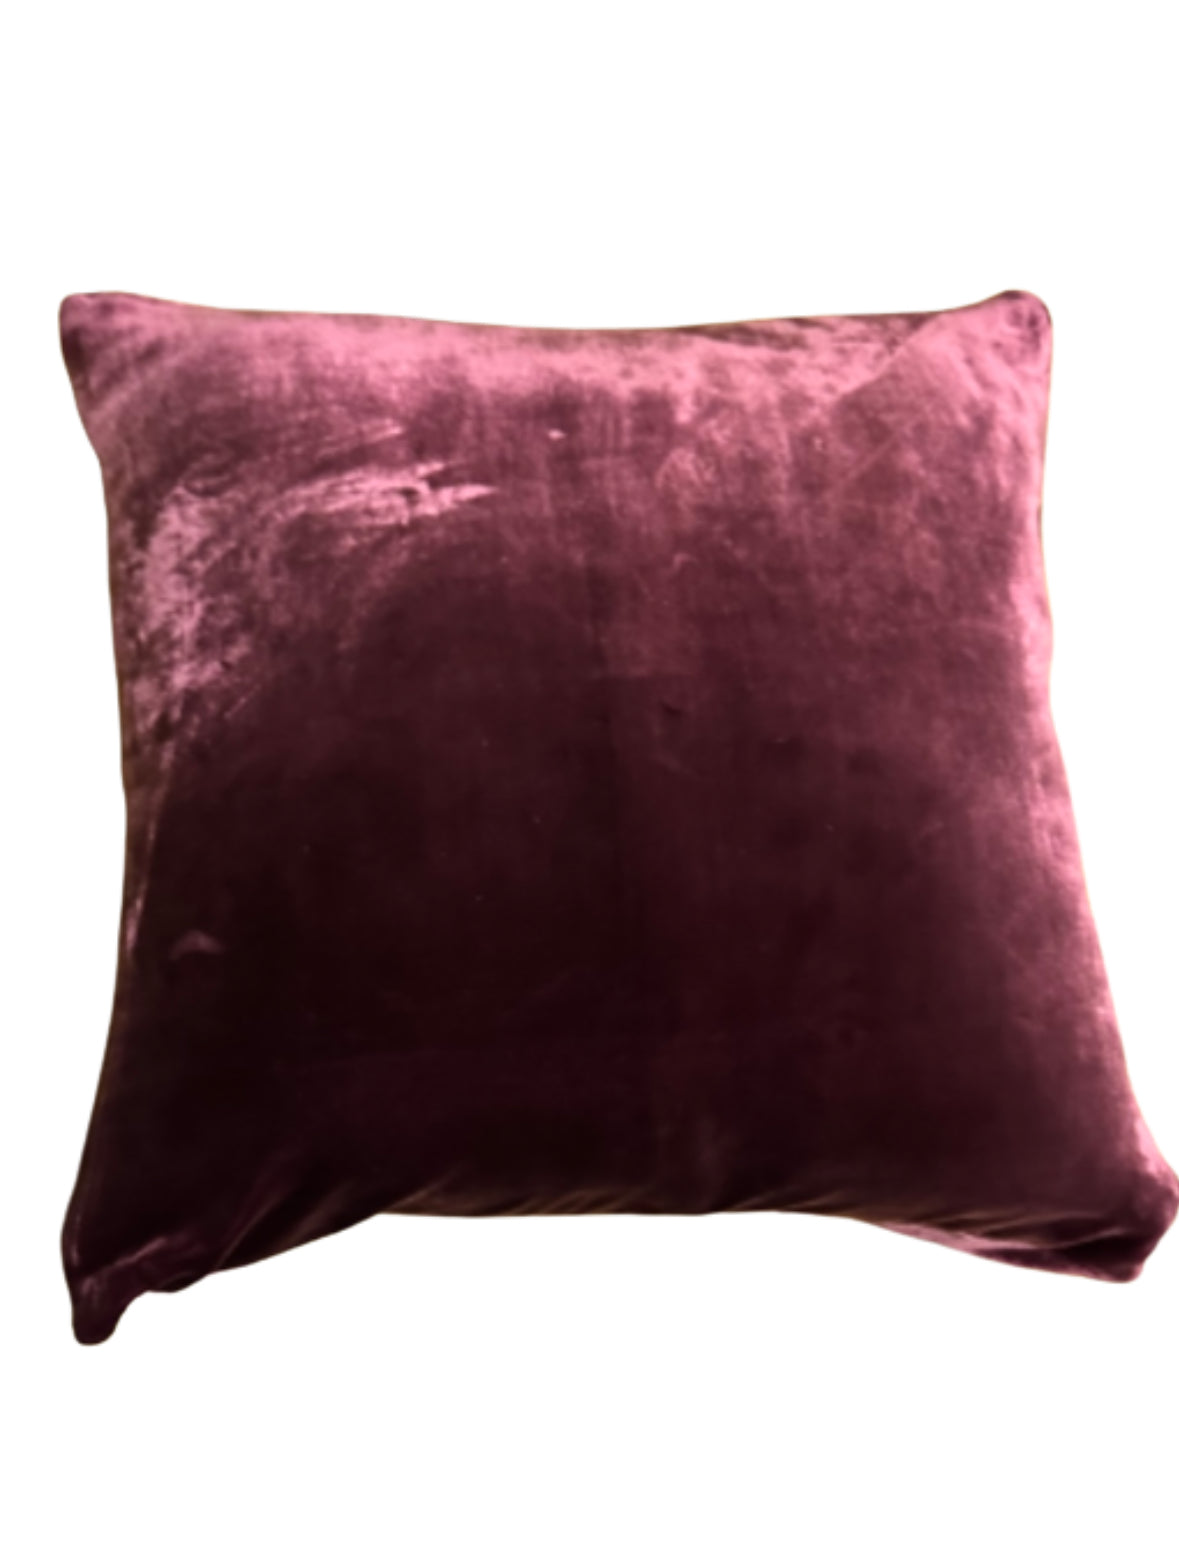 MAD MEN: Don and Betty's Mid-Century Purple Velvet Pillow